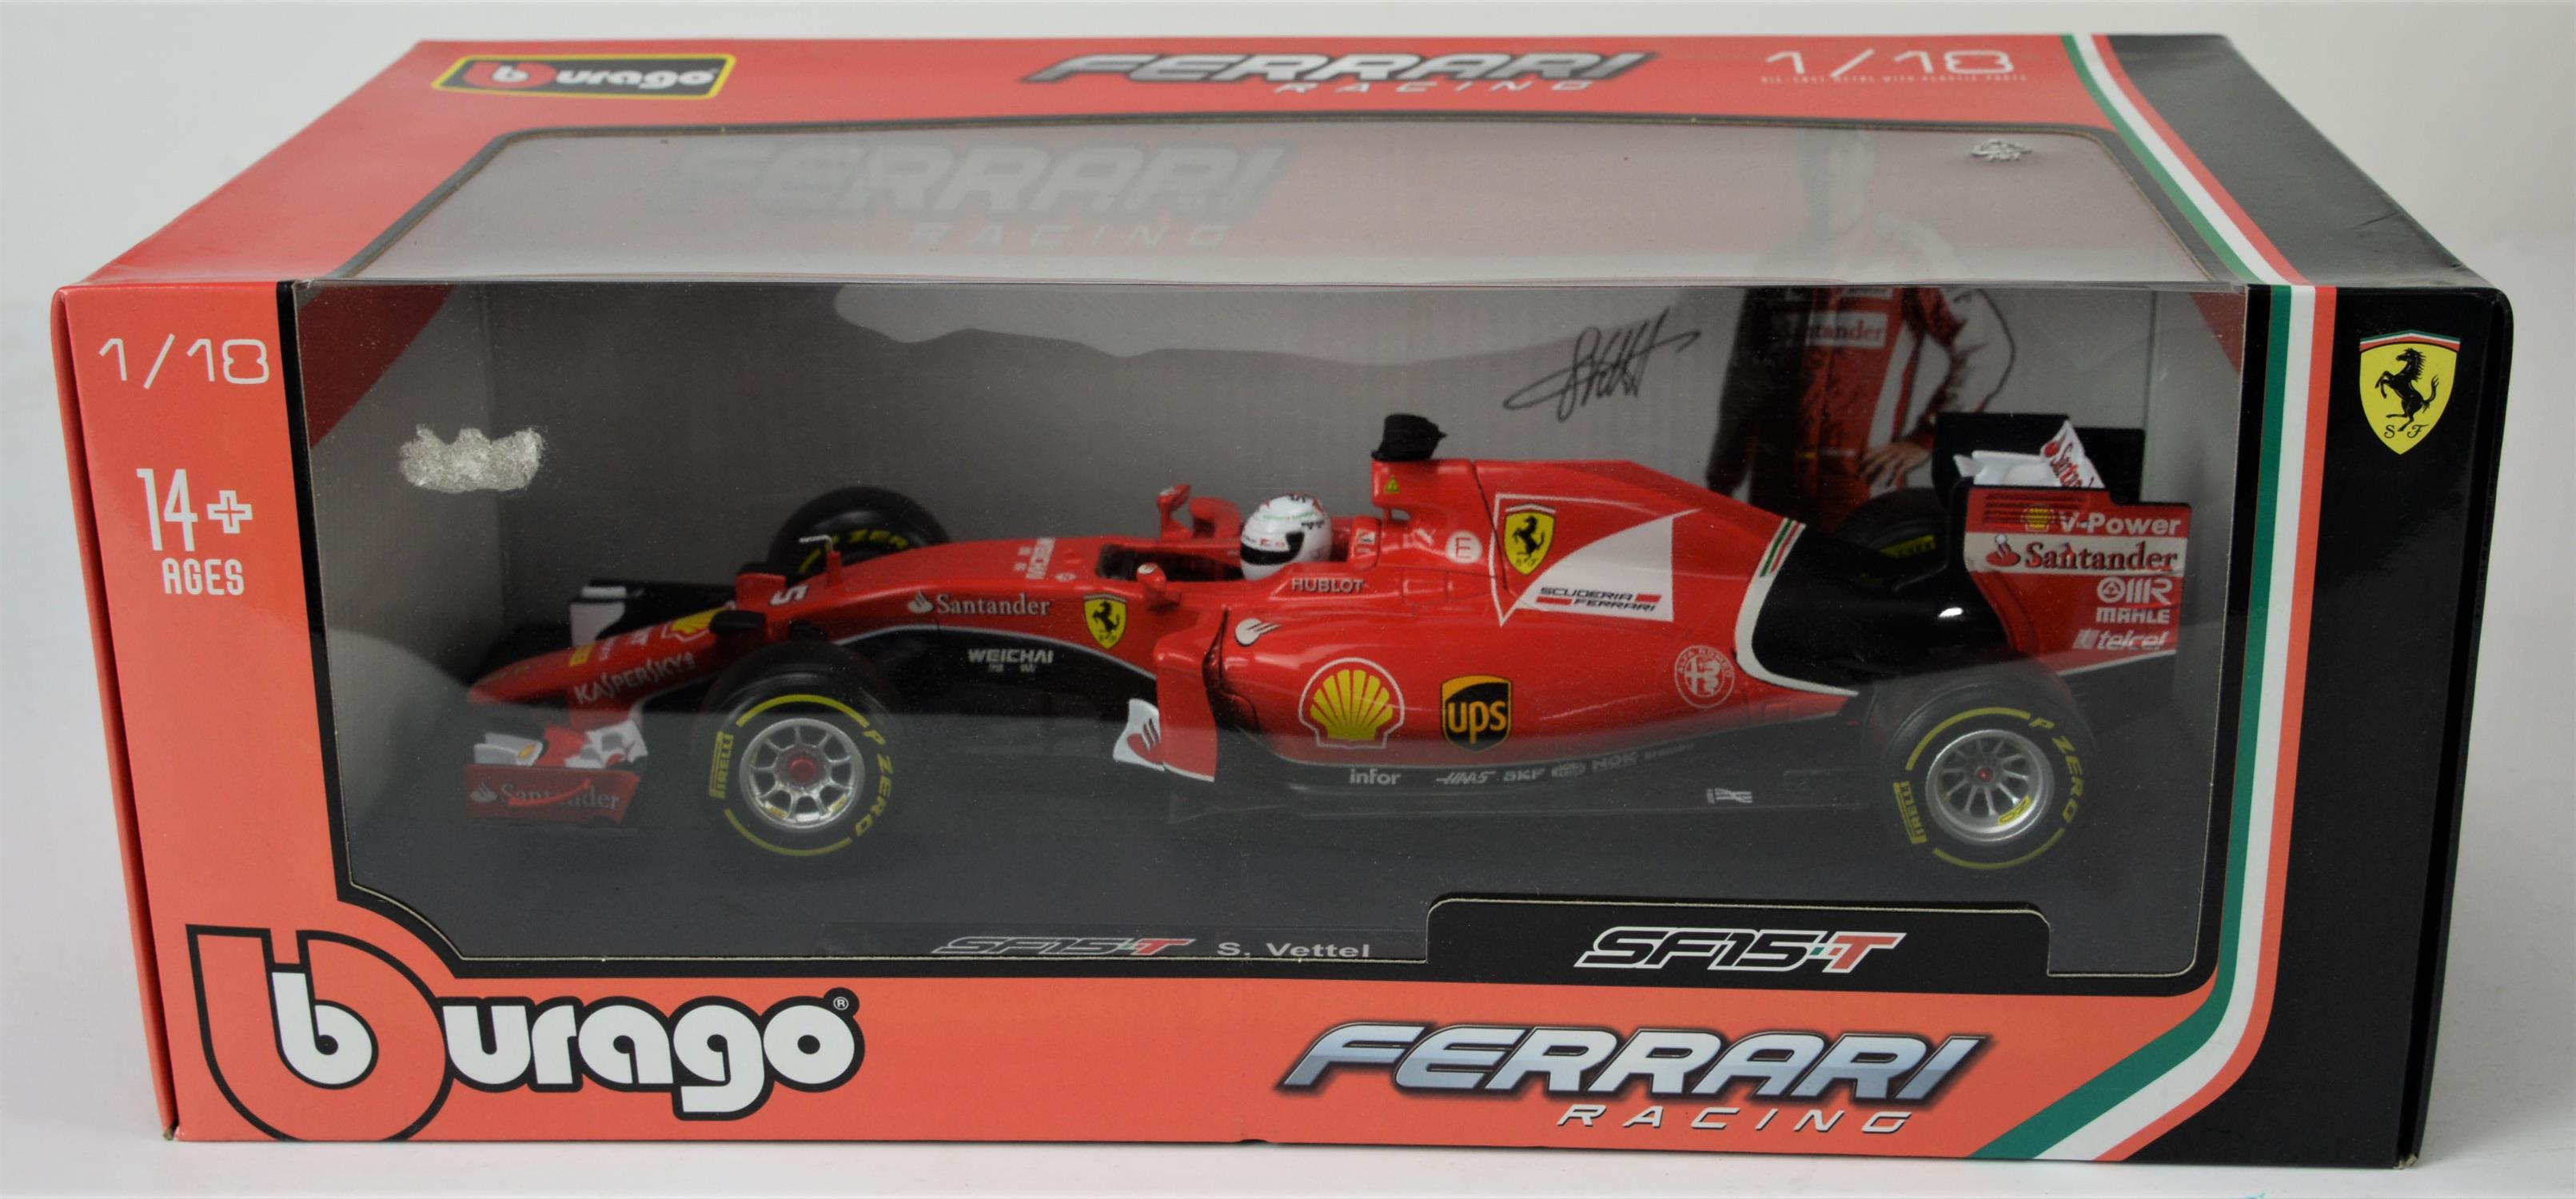 F1 Boxed models and framed items - Models to include, Tonka Polistil, Burago Ferrari F1 models, - Image 2 of 6